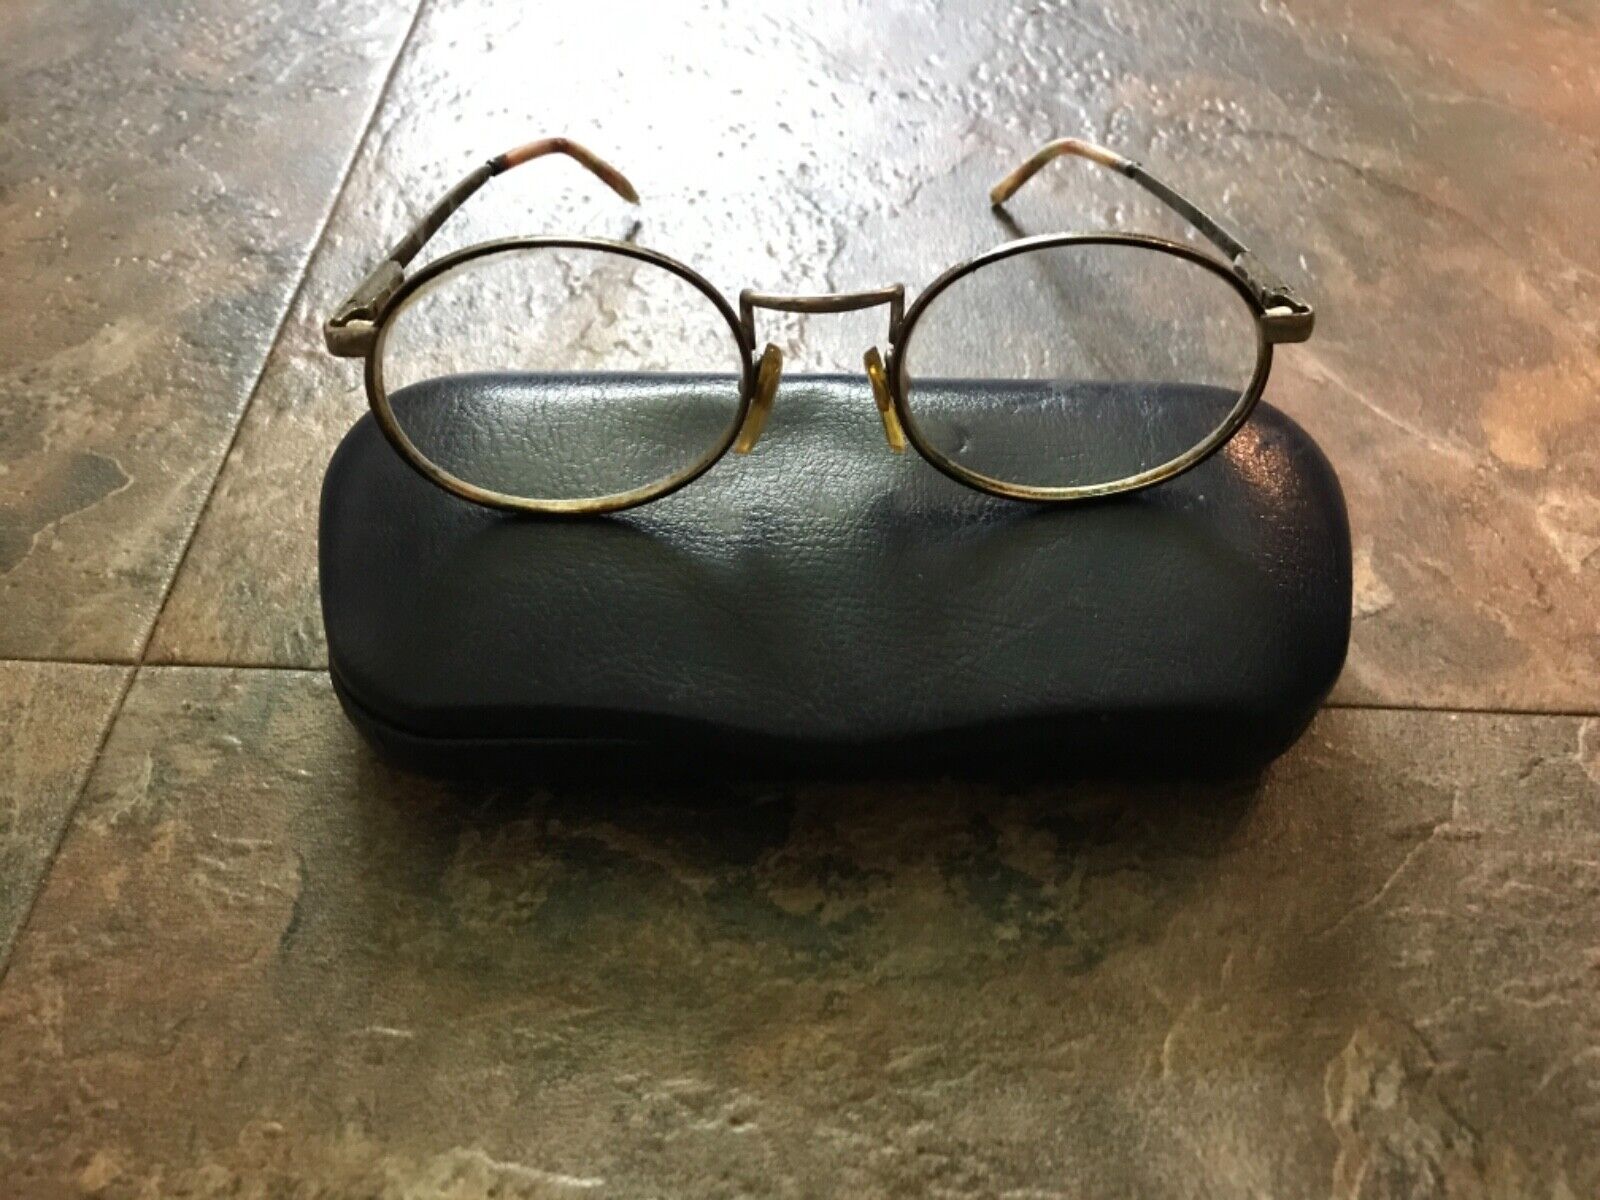 Old prescription eyeglasses, circa 1980s, metal frame. Case included